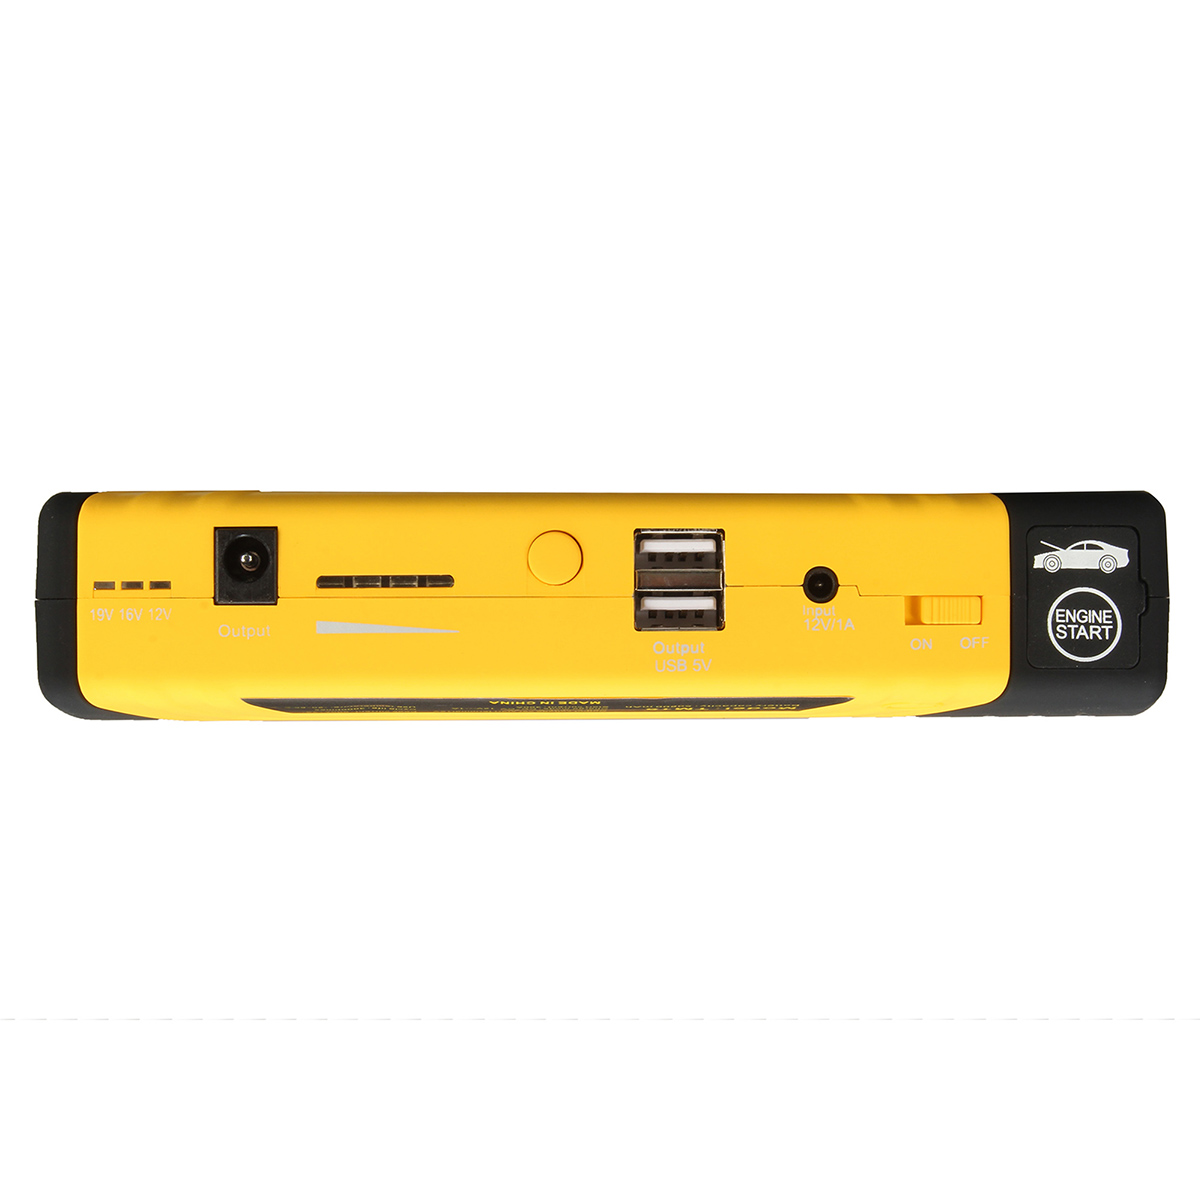 50800mAh-LED-Dual-USB-Car-Jump-Starter-Booster-Portable-Power-Bank-Backup-Charger-1113683